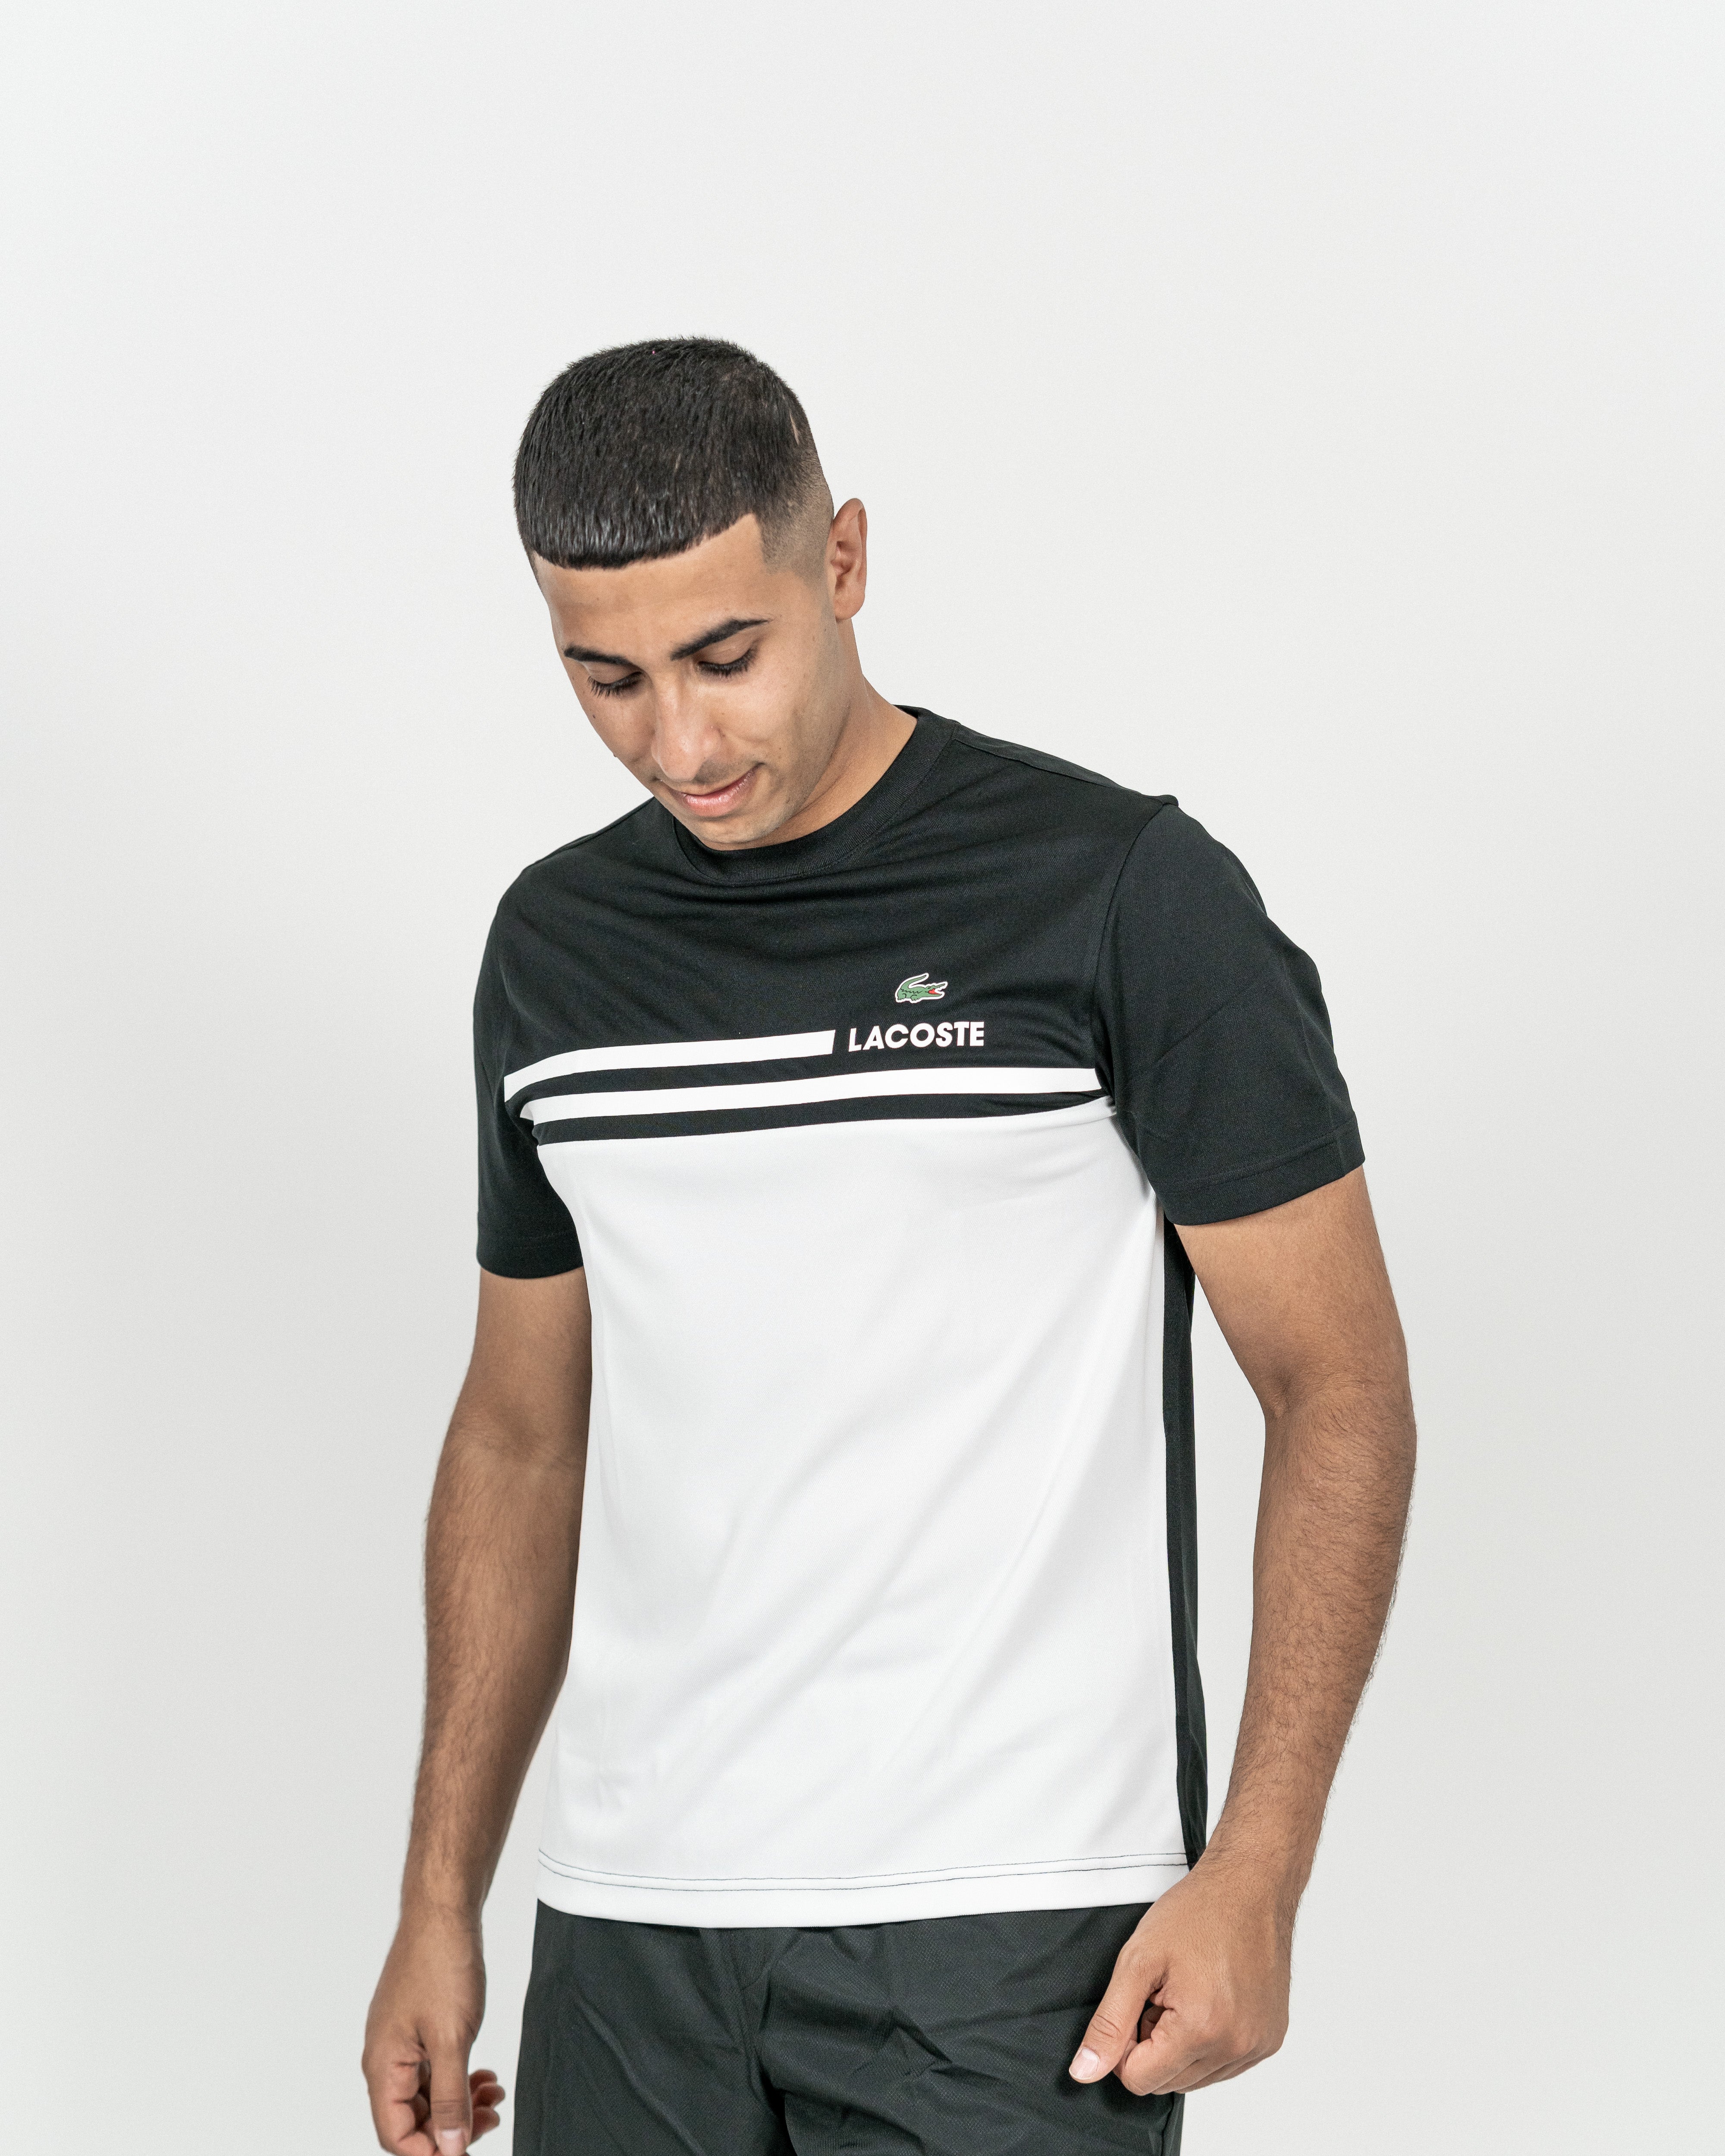 Lacoste Novak Djokovic Tennis T-shirt Sort/Hvid